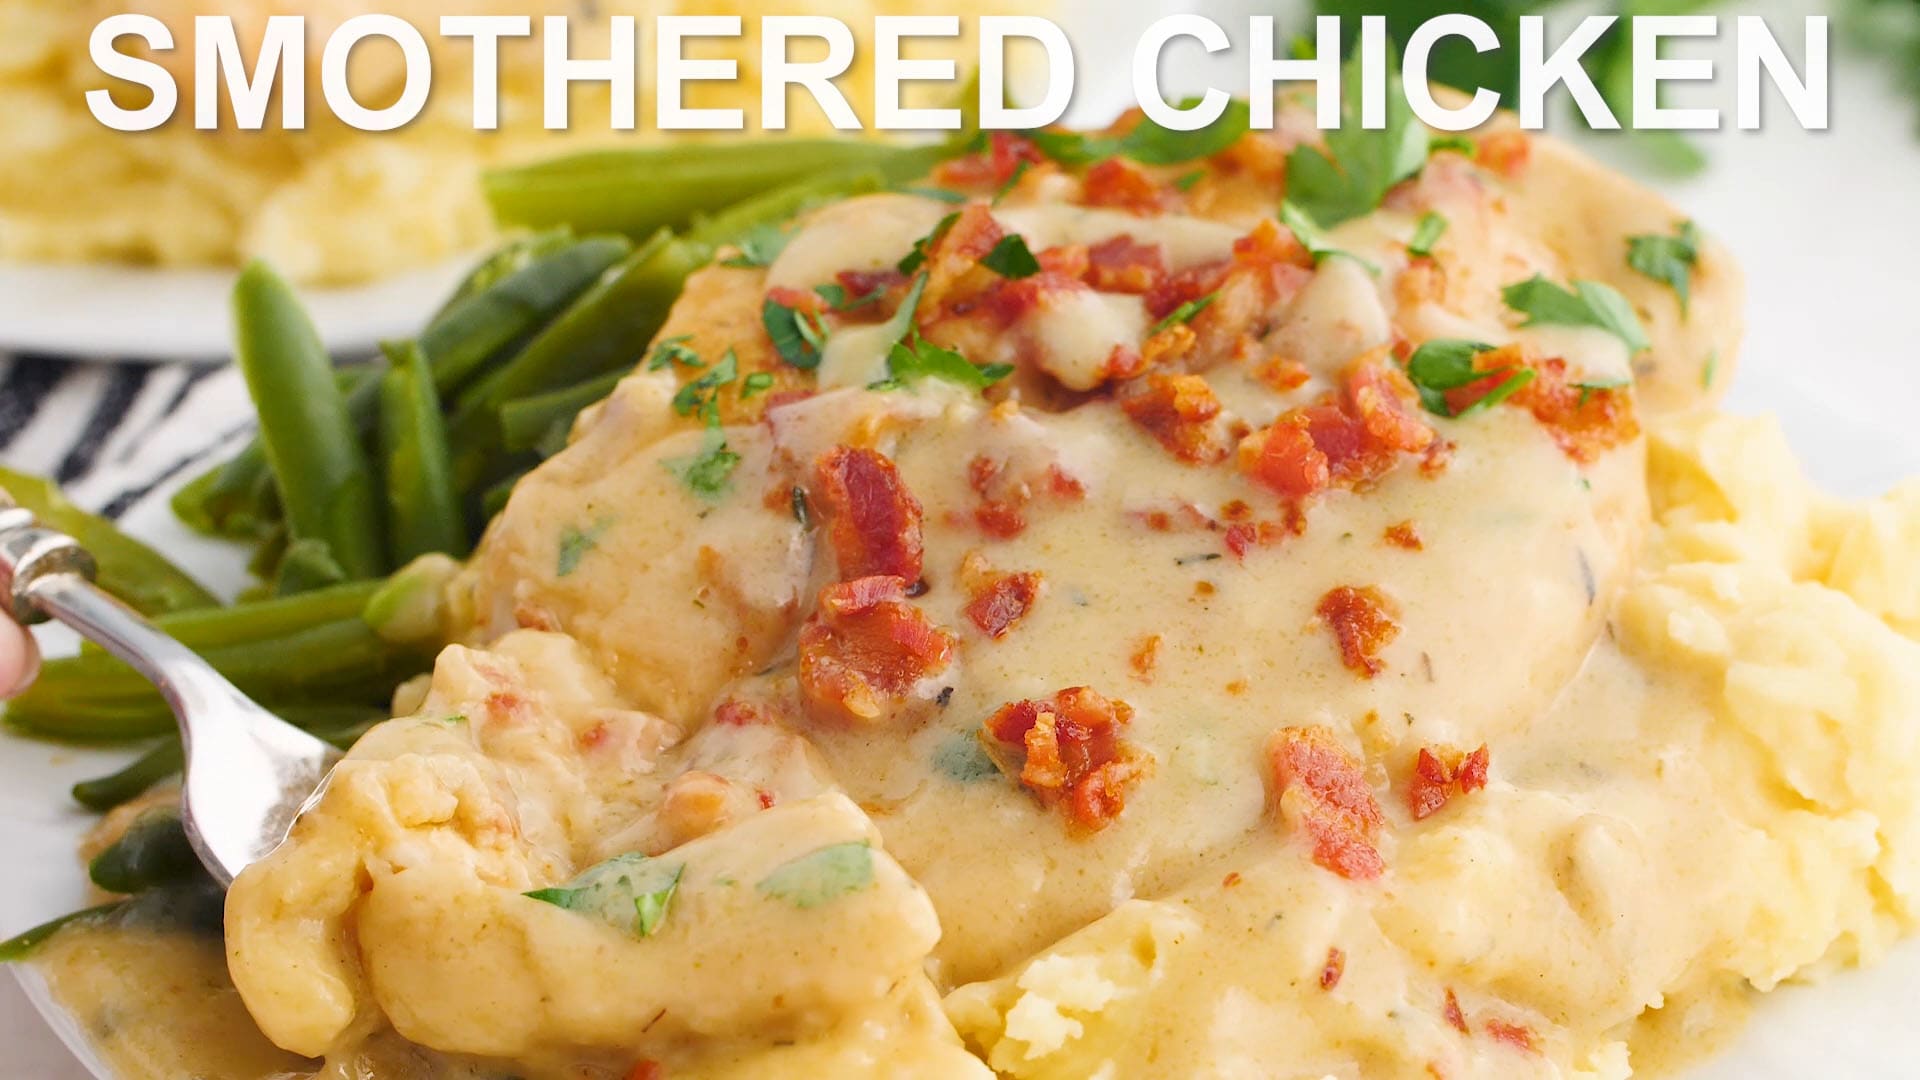 Smothered Chicken Recipe - The Washington Post